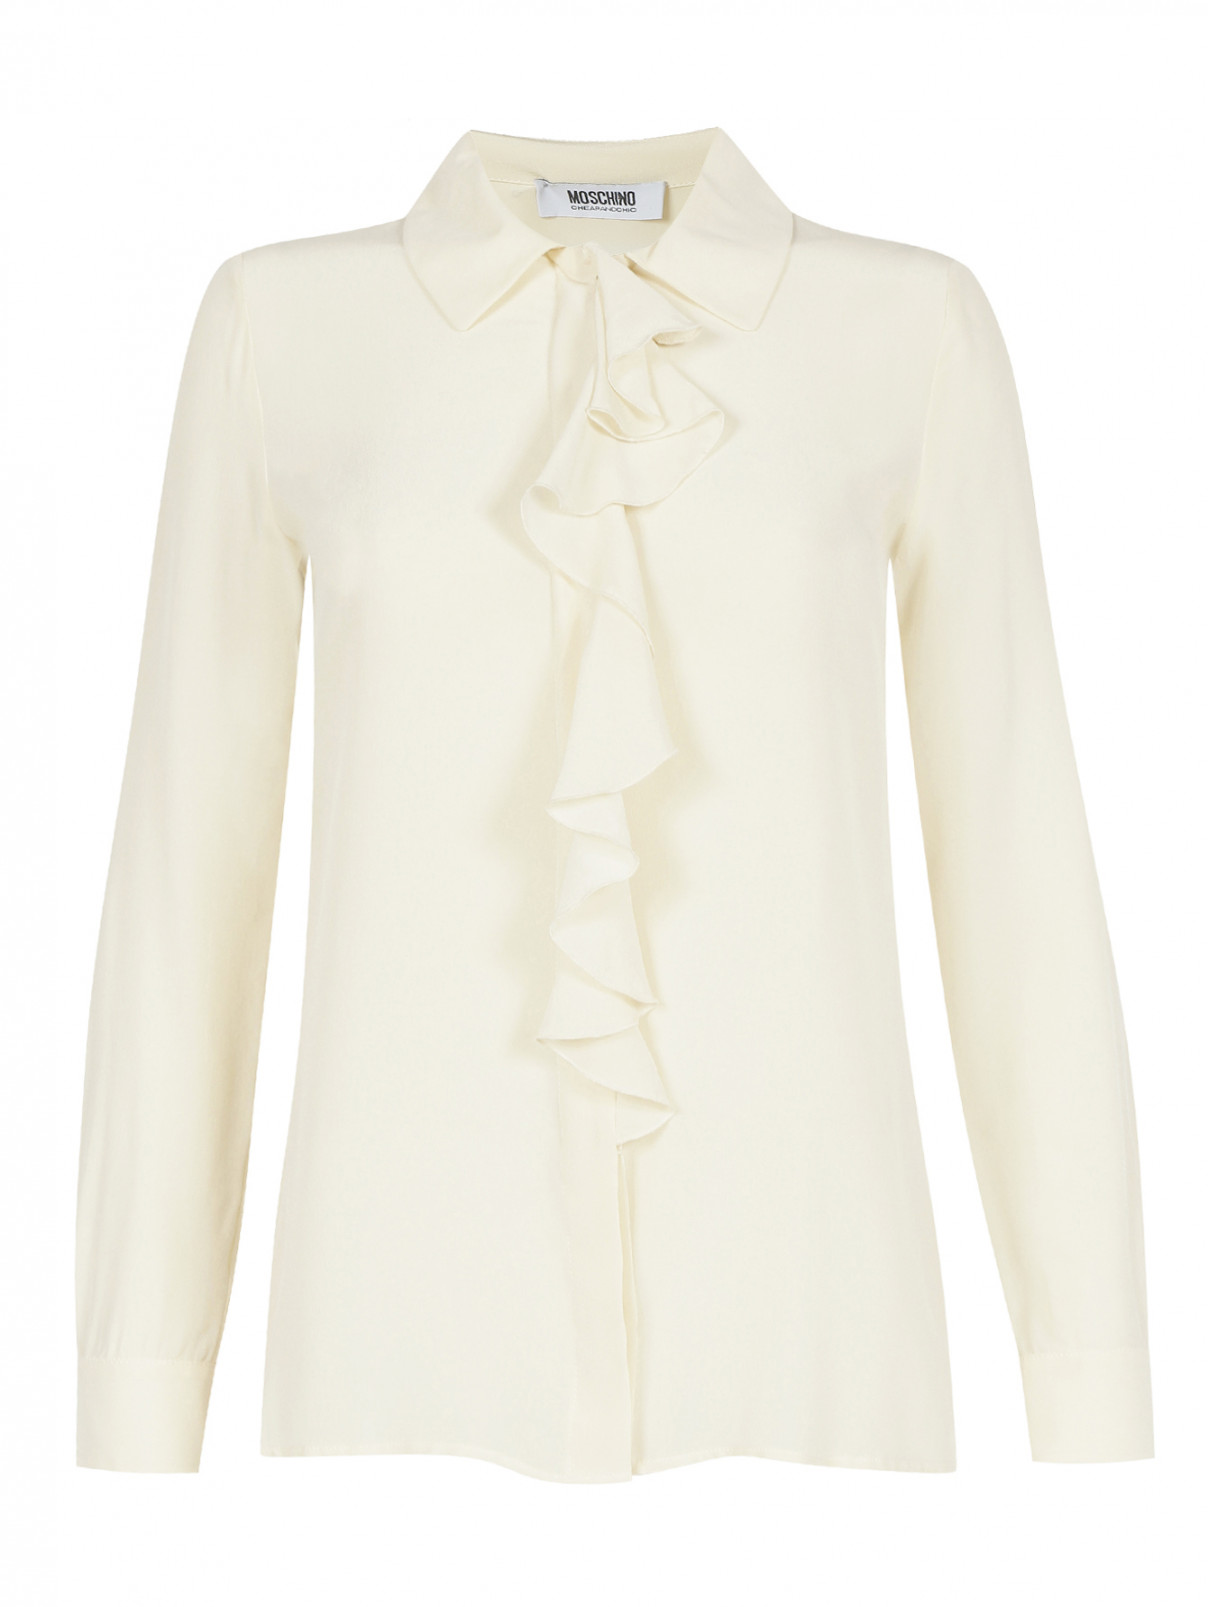 Блуза из шелка с воланом Moschino Cheap&Chic  –  Общий вид  – Цвет:  Серый